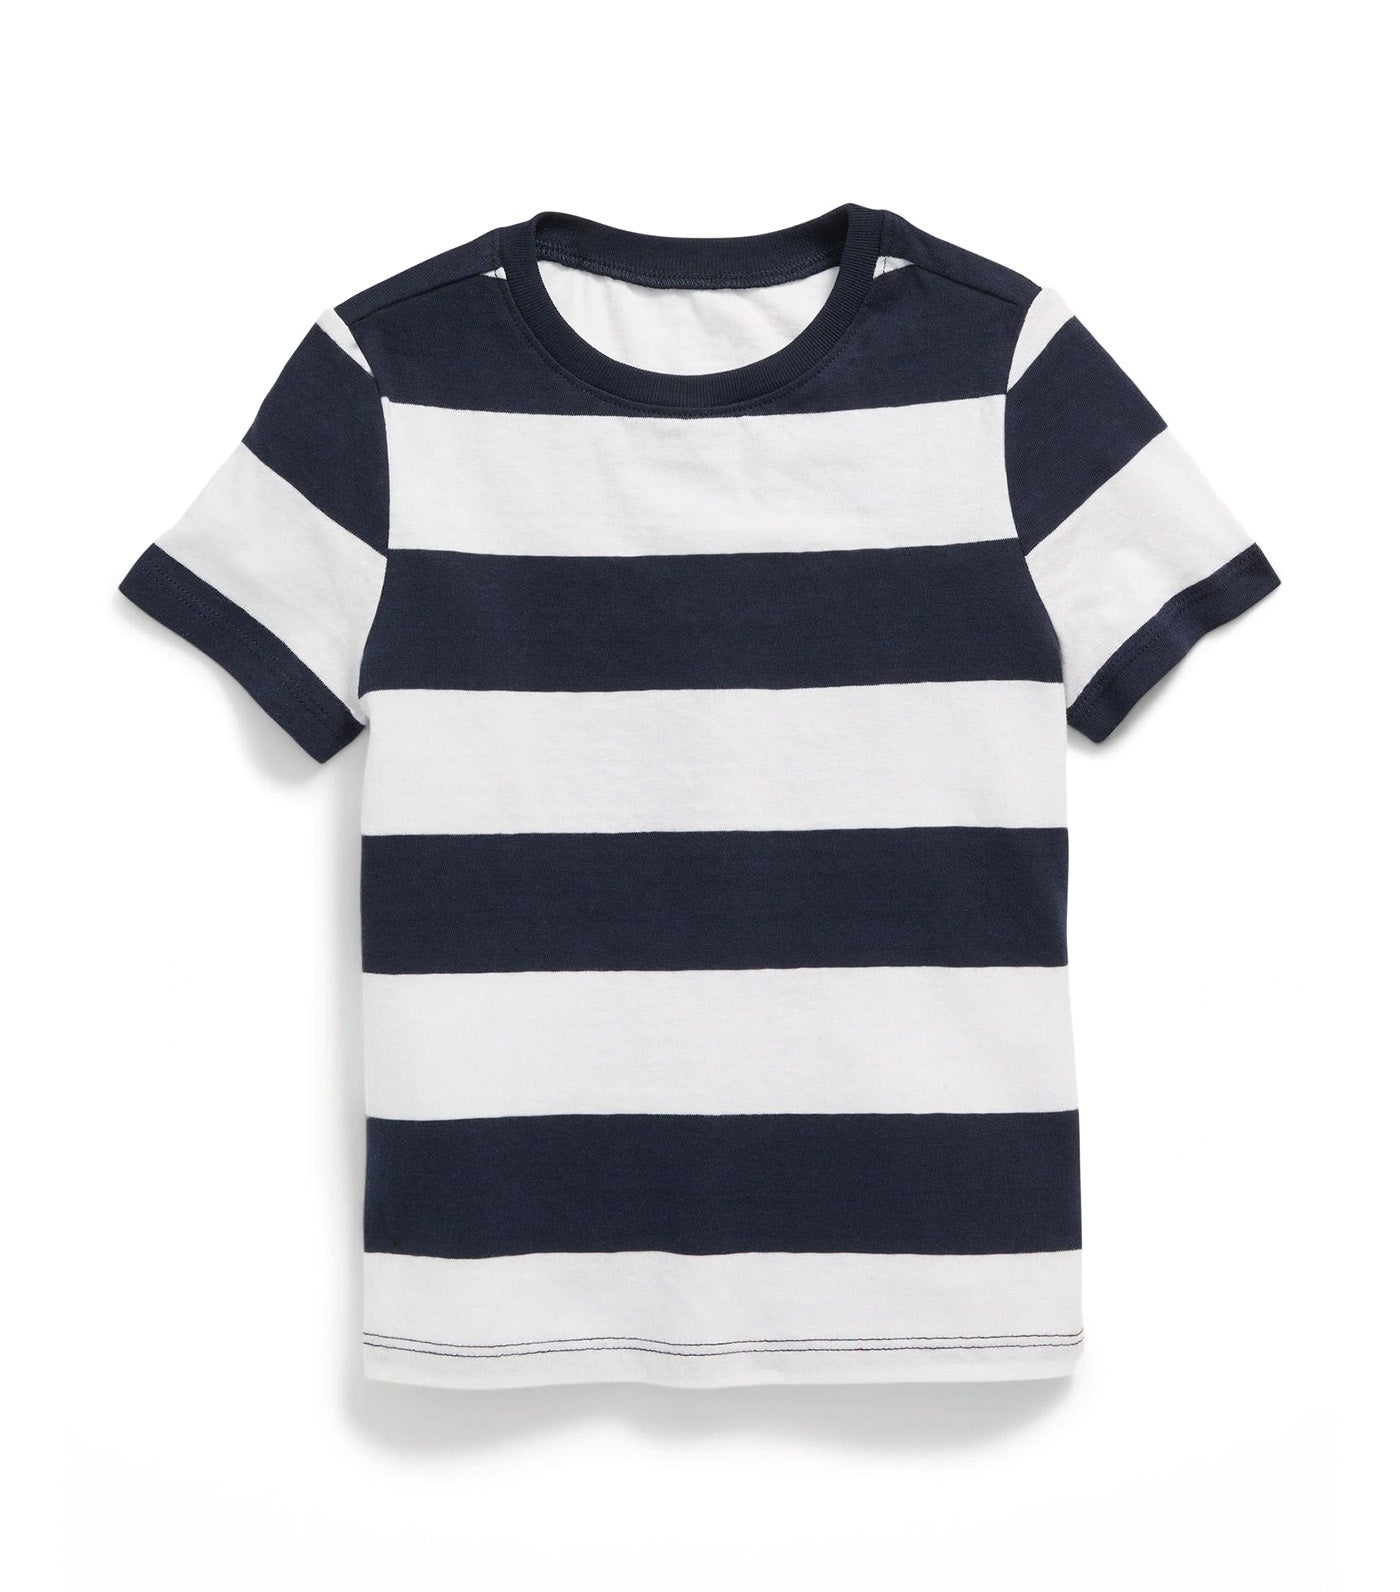 Unisex Printed T-Shirt for Toddler - Navy Stripe